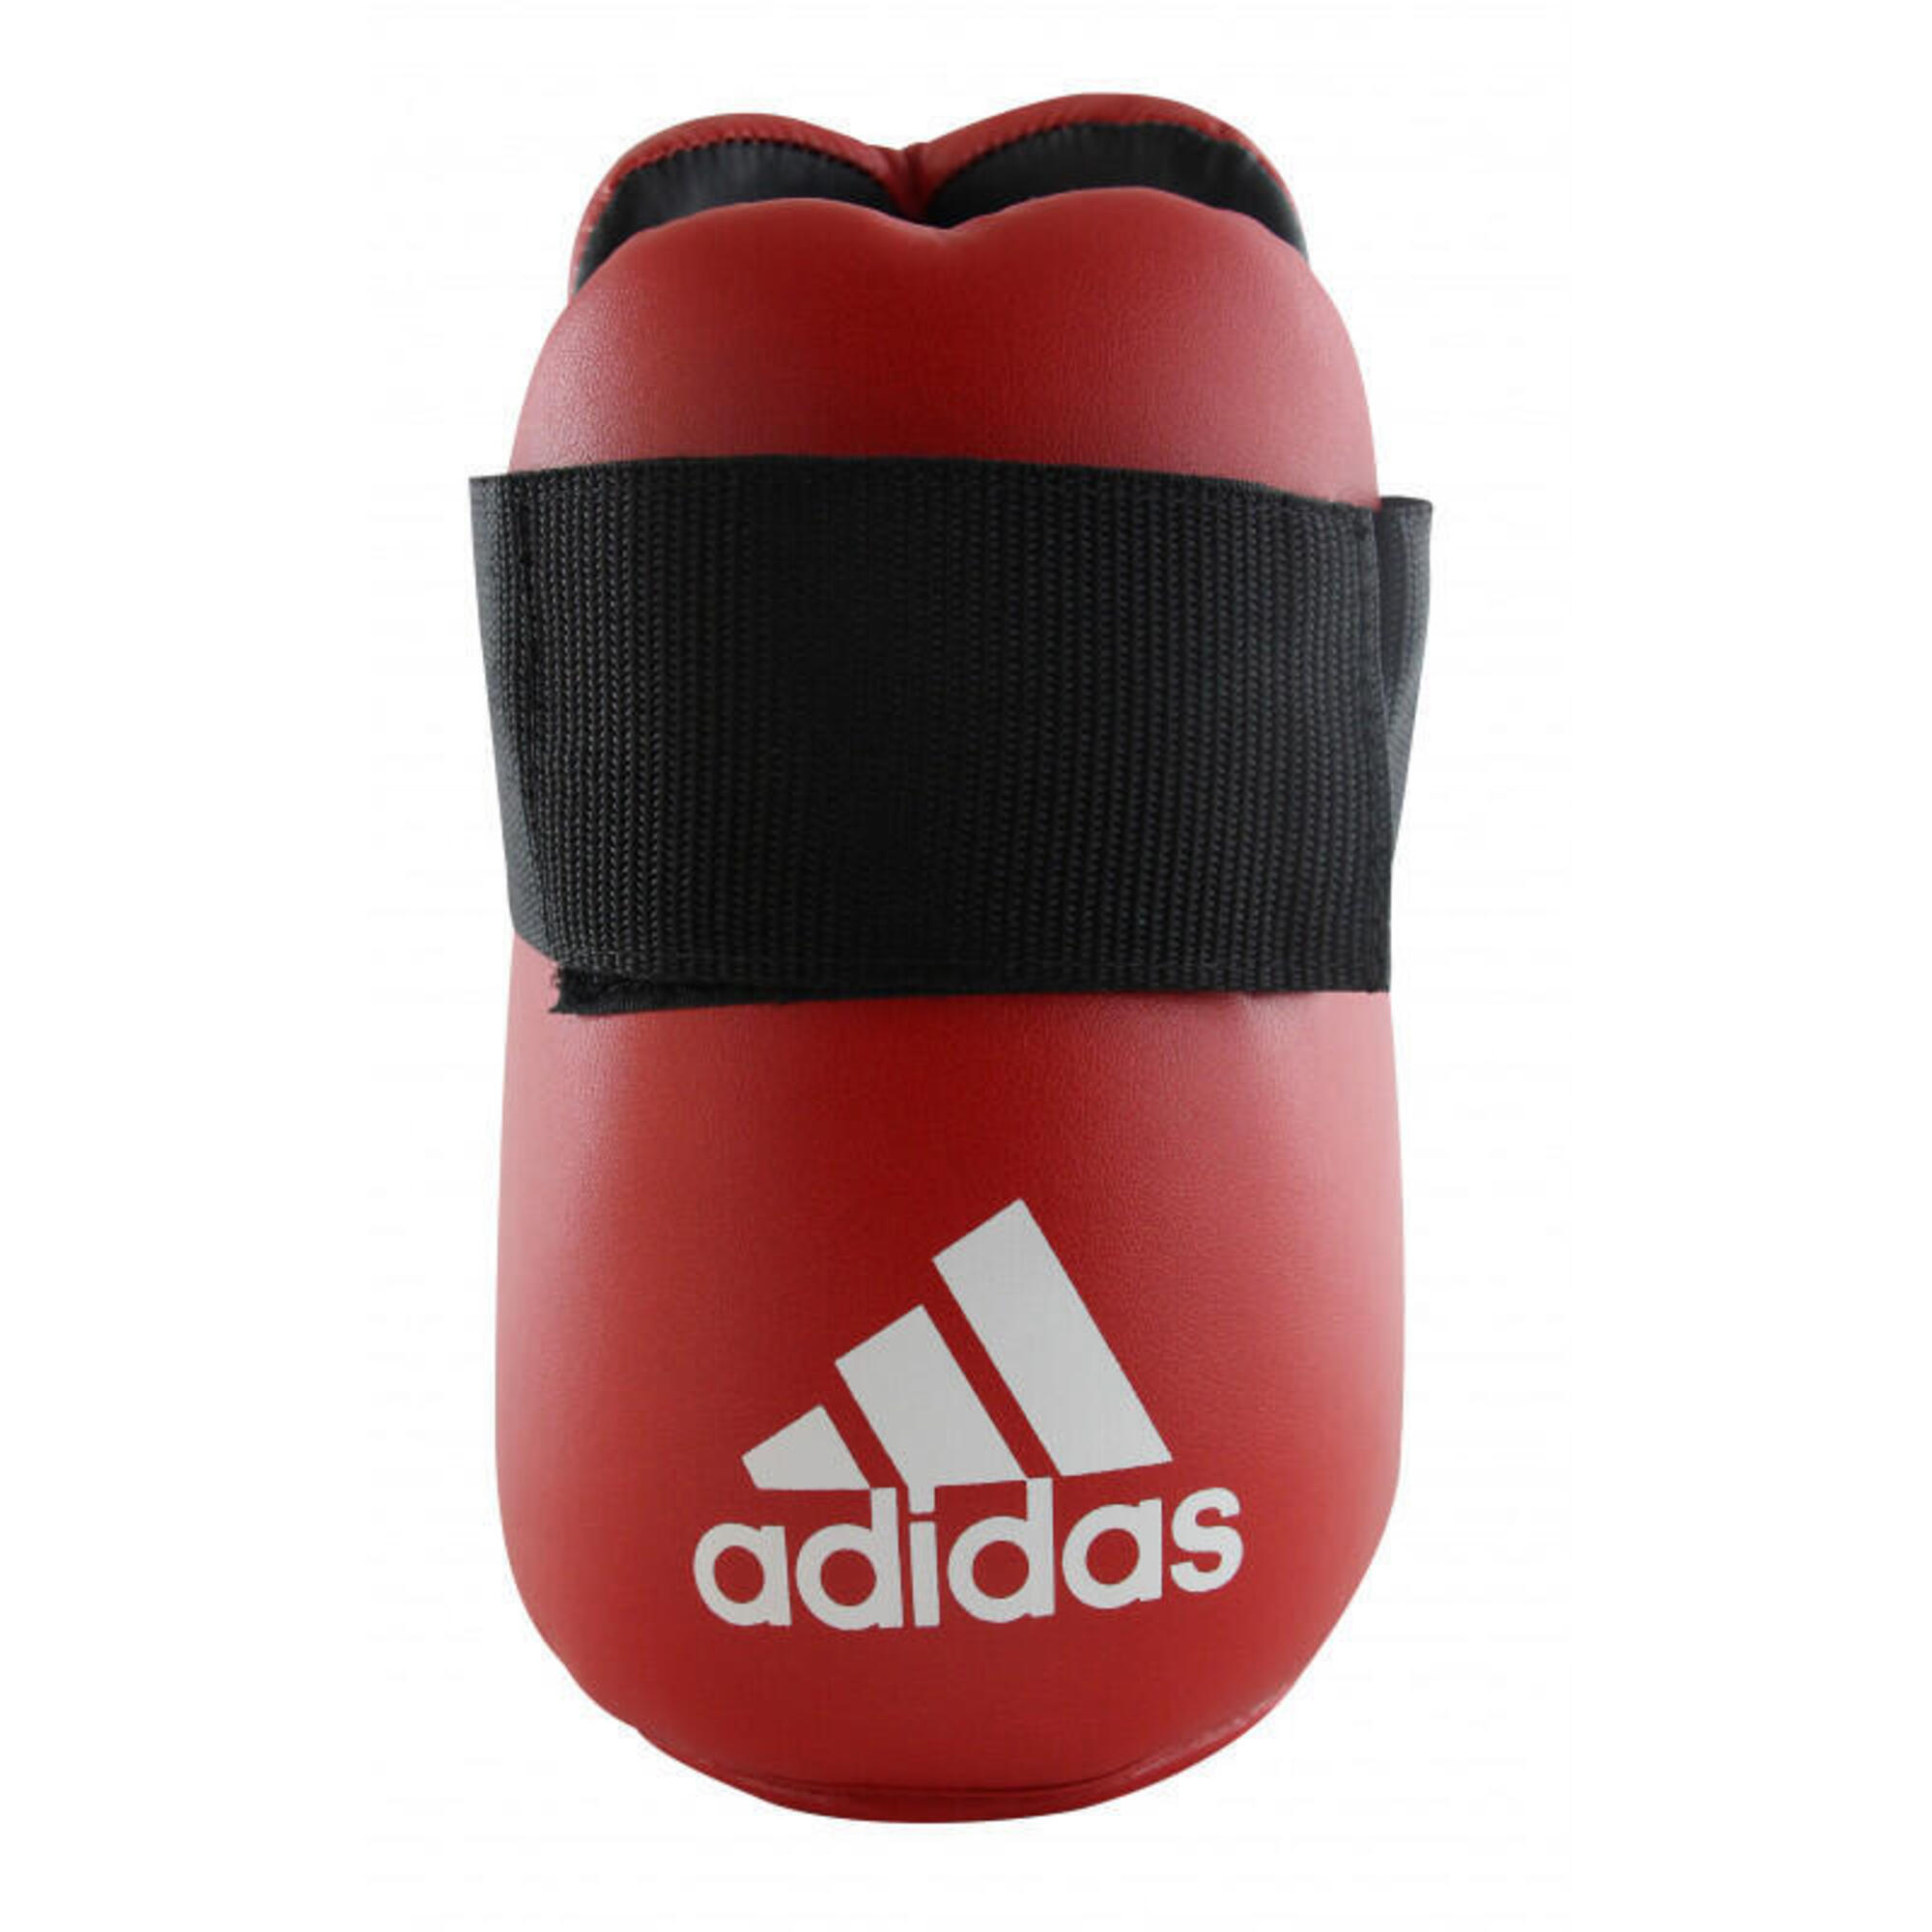 Adidas Super Safety Kicks Pro Voetbeschermers - Rood - L